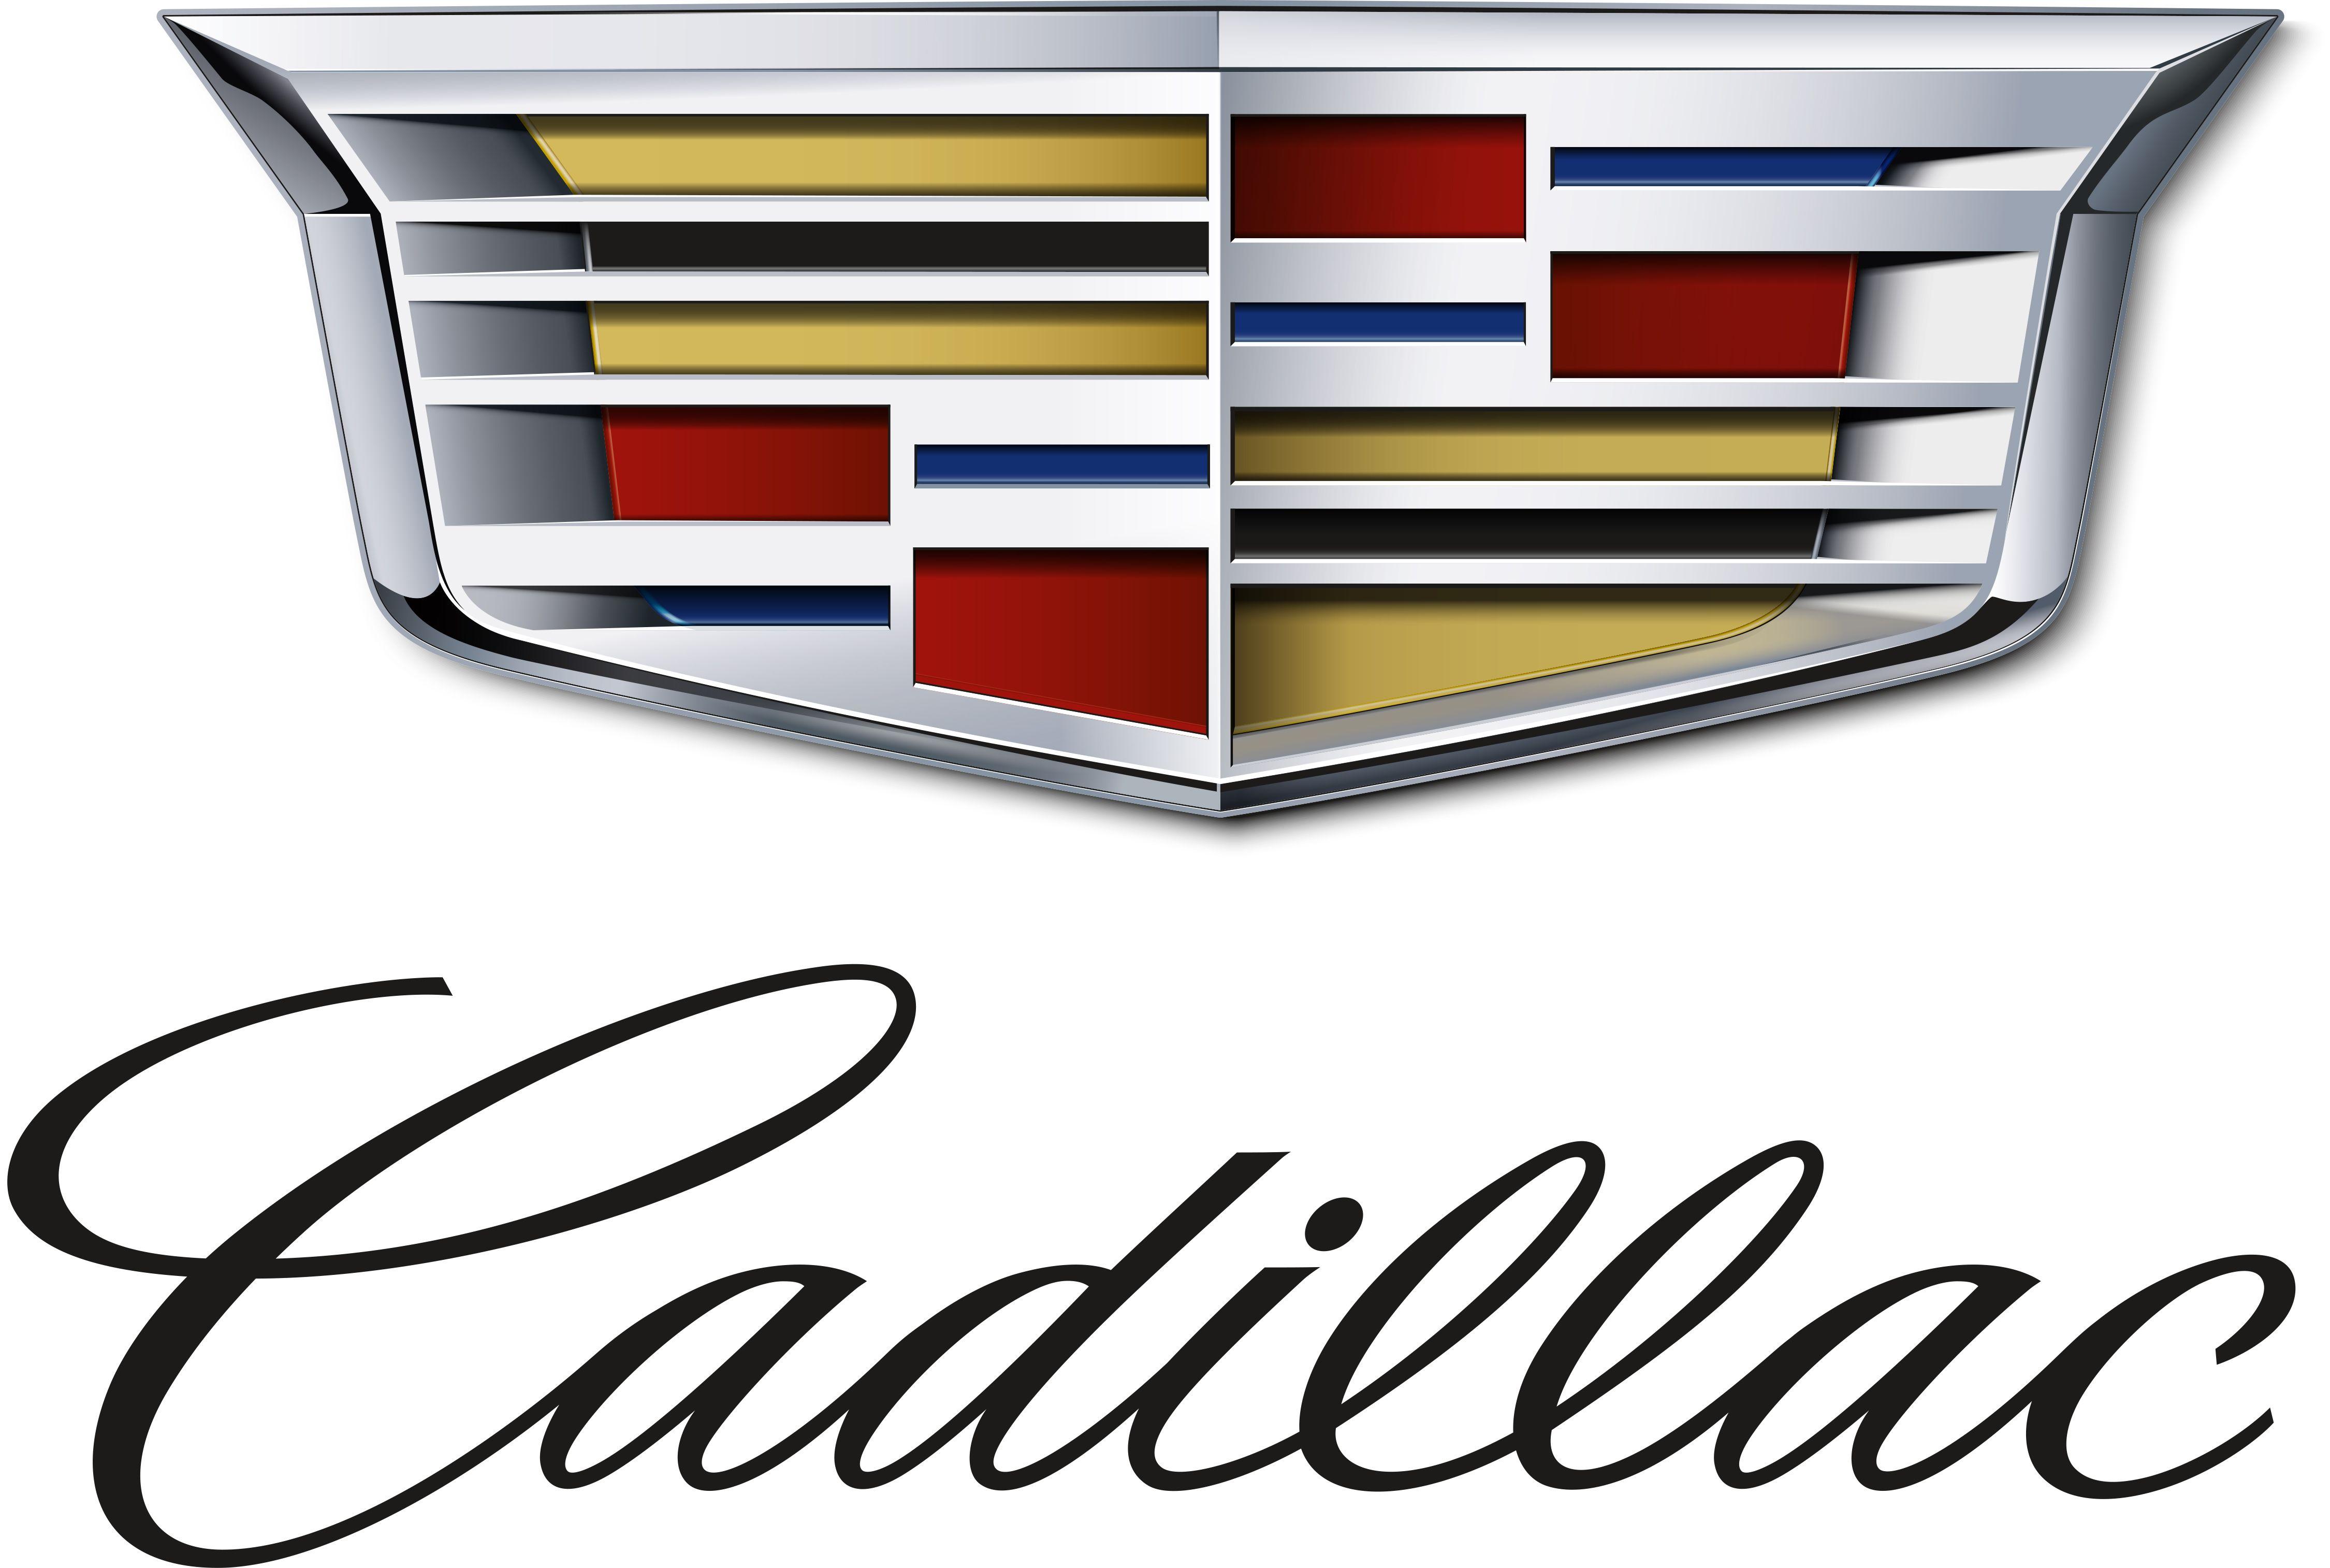 2014 Cadillac Logo - GM Canadian Corporate Newsroom - Canada - Images